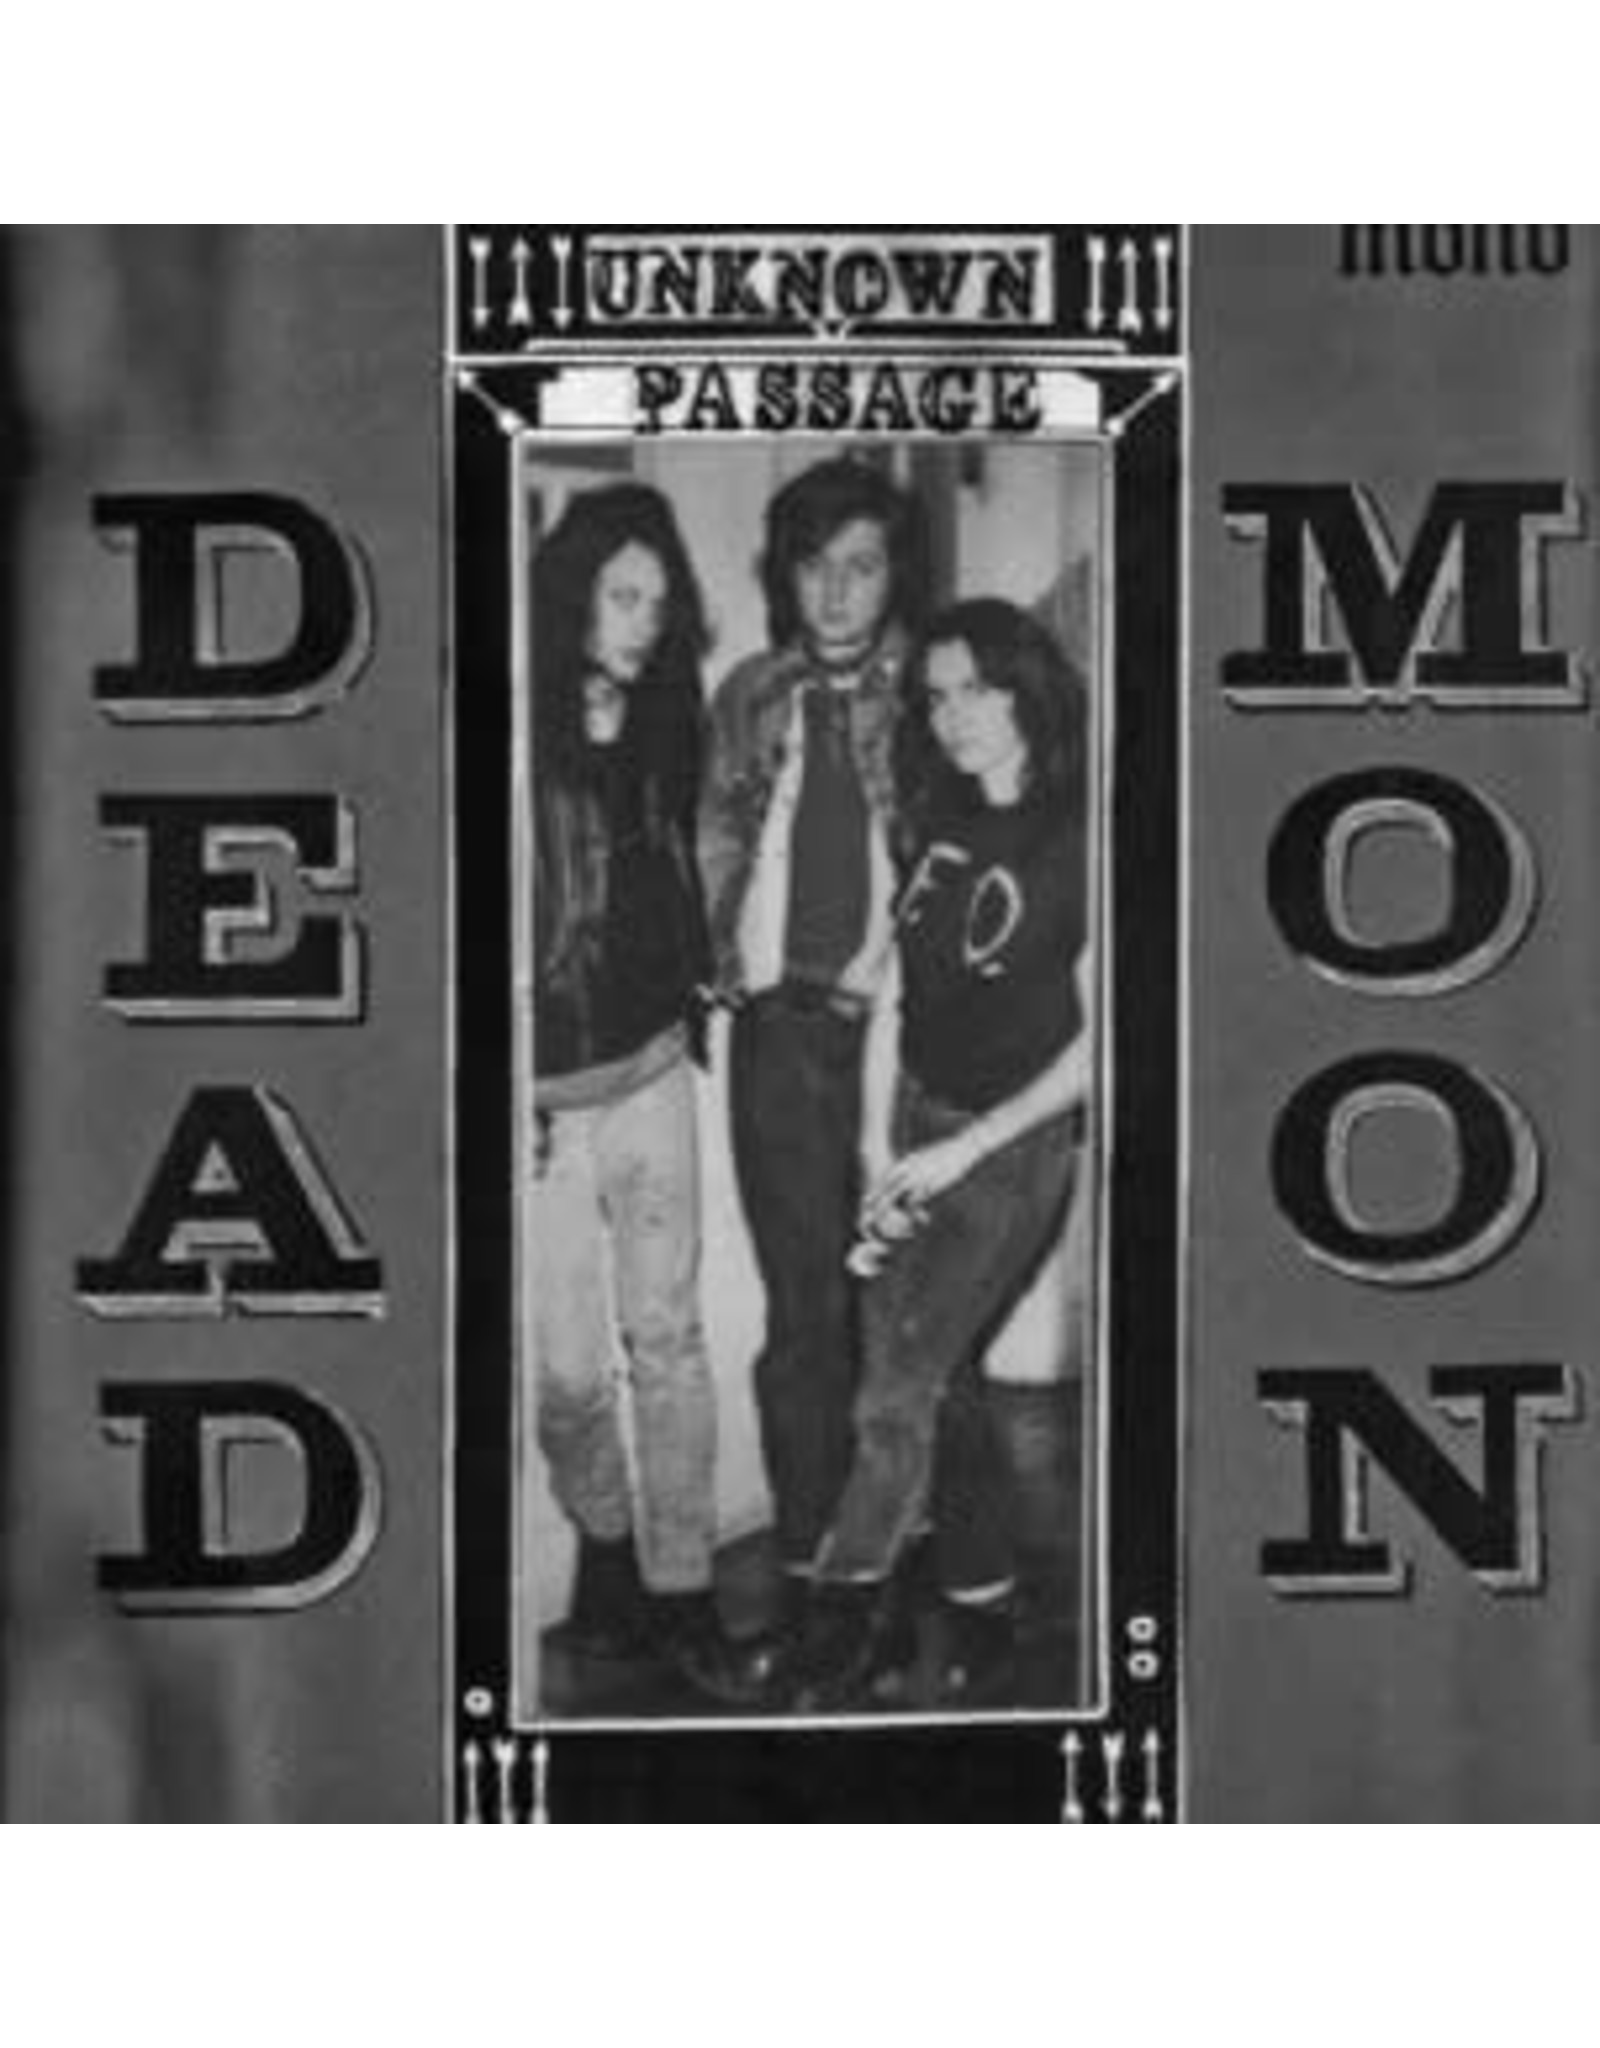 Mississippi Dead Moon: Unknown Passage LP